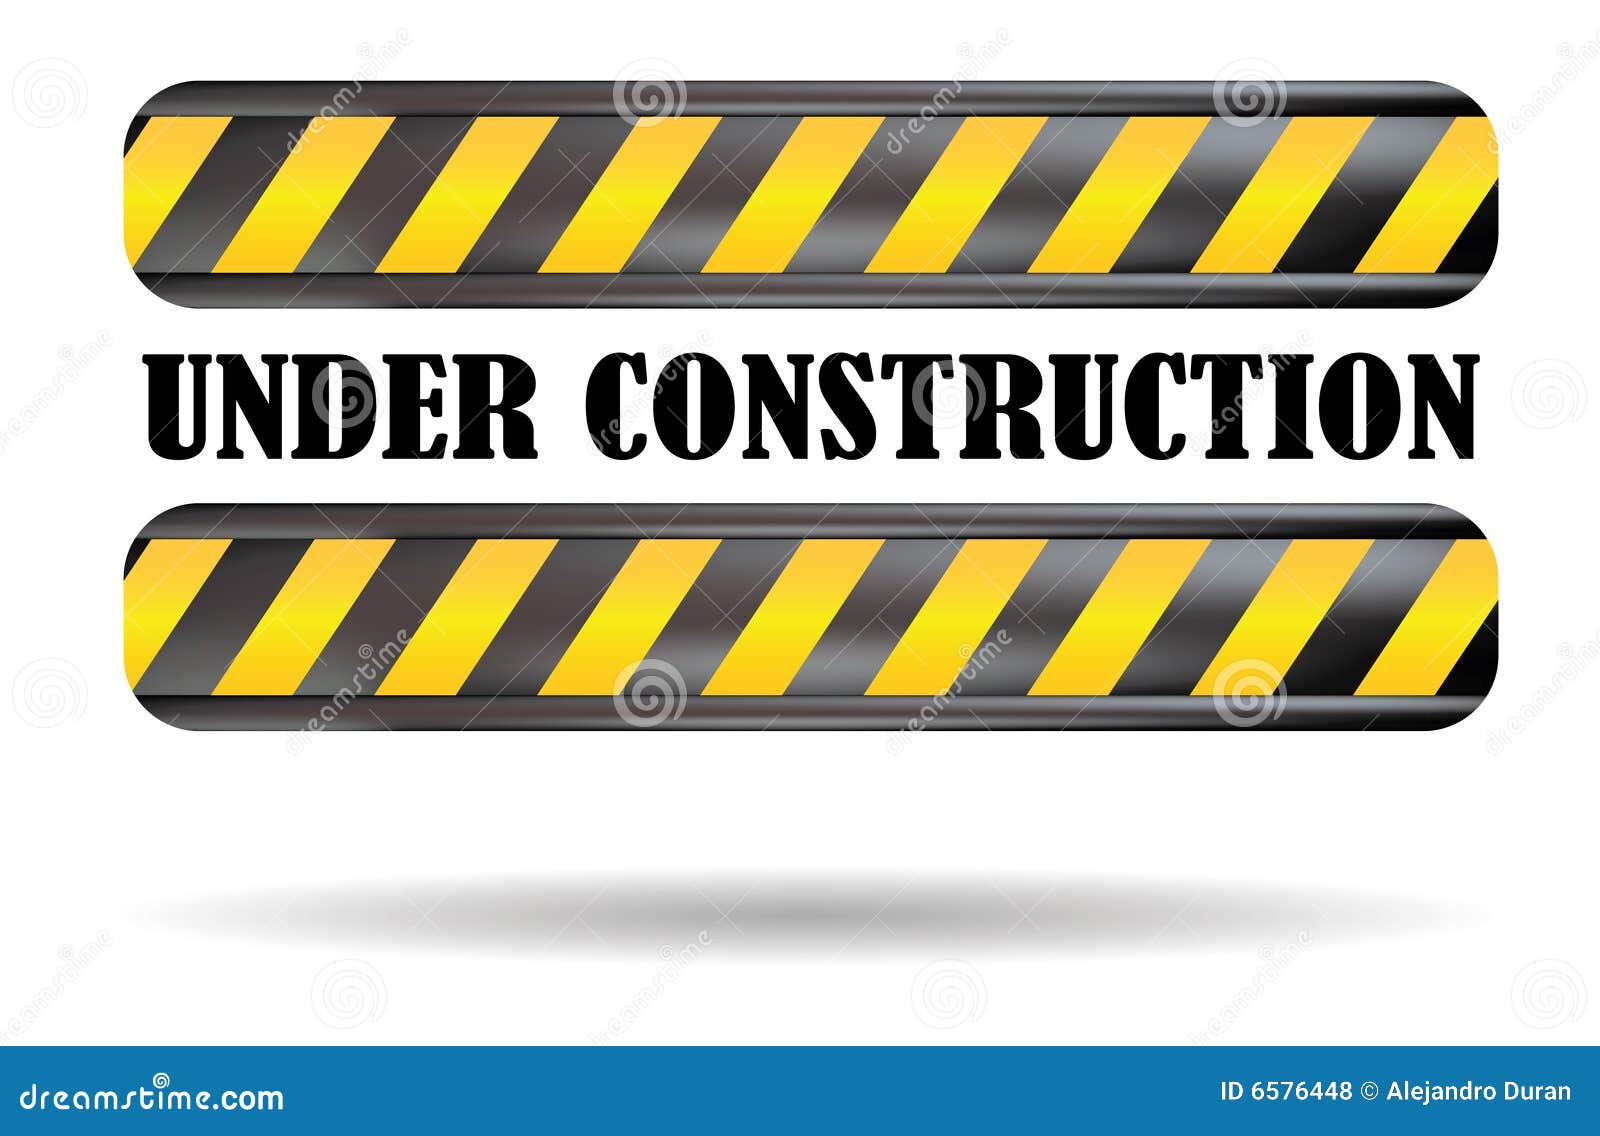 Under construction sign stock vector. Illustration of road - 6576448